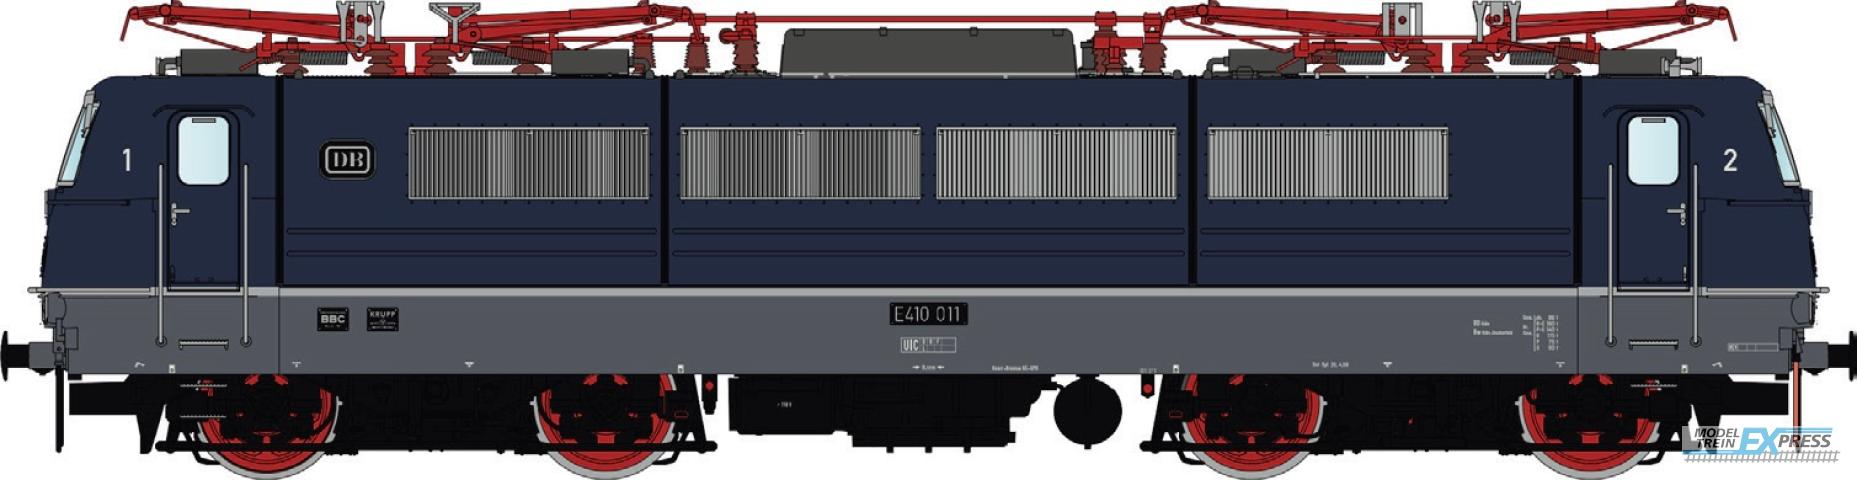 LS Models 16522 DB E 410 011 (BBC) viersysteem-eloc Ep. IIIc (1967), staalblauw/leisteengrijs, 4 stroomafnemers, depot Köln-Deutzerfeld / Ep. IIIc / DB / HO / AC / 1 P.